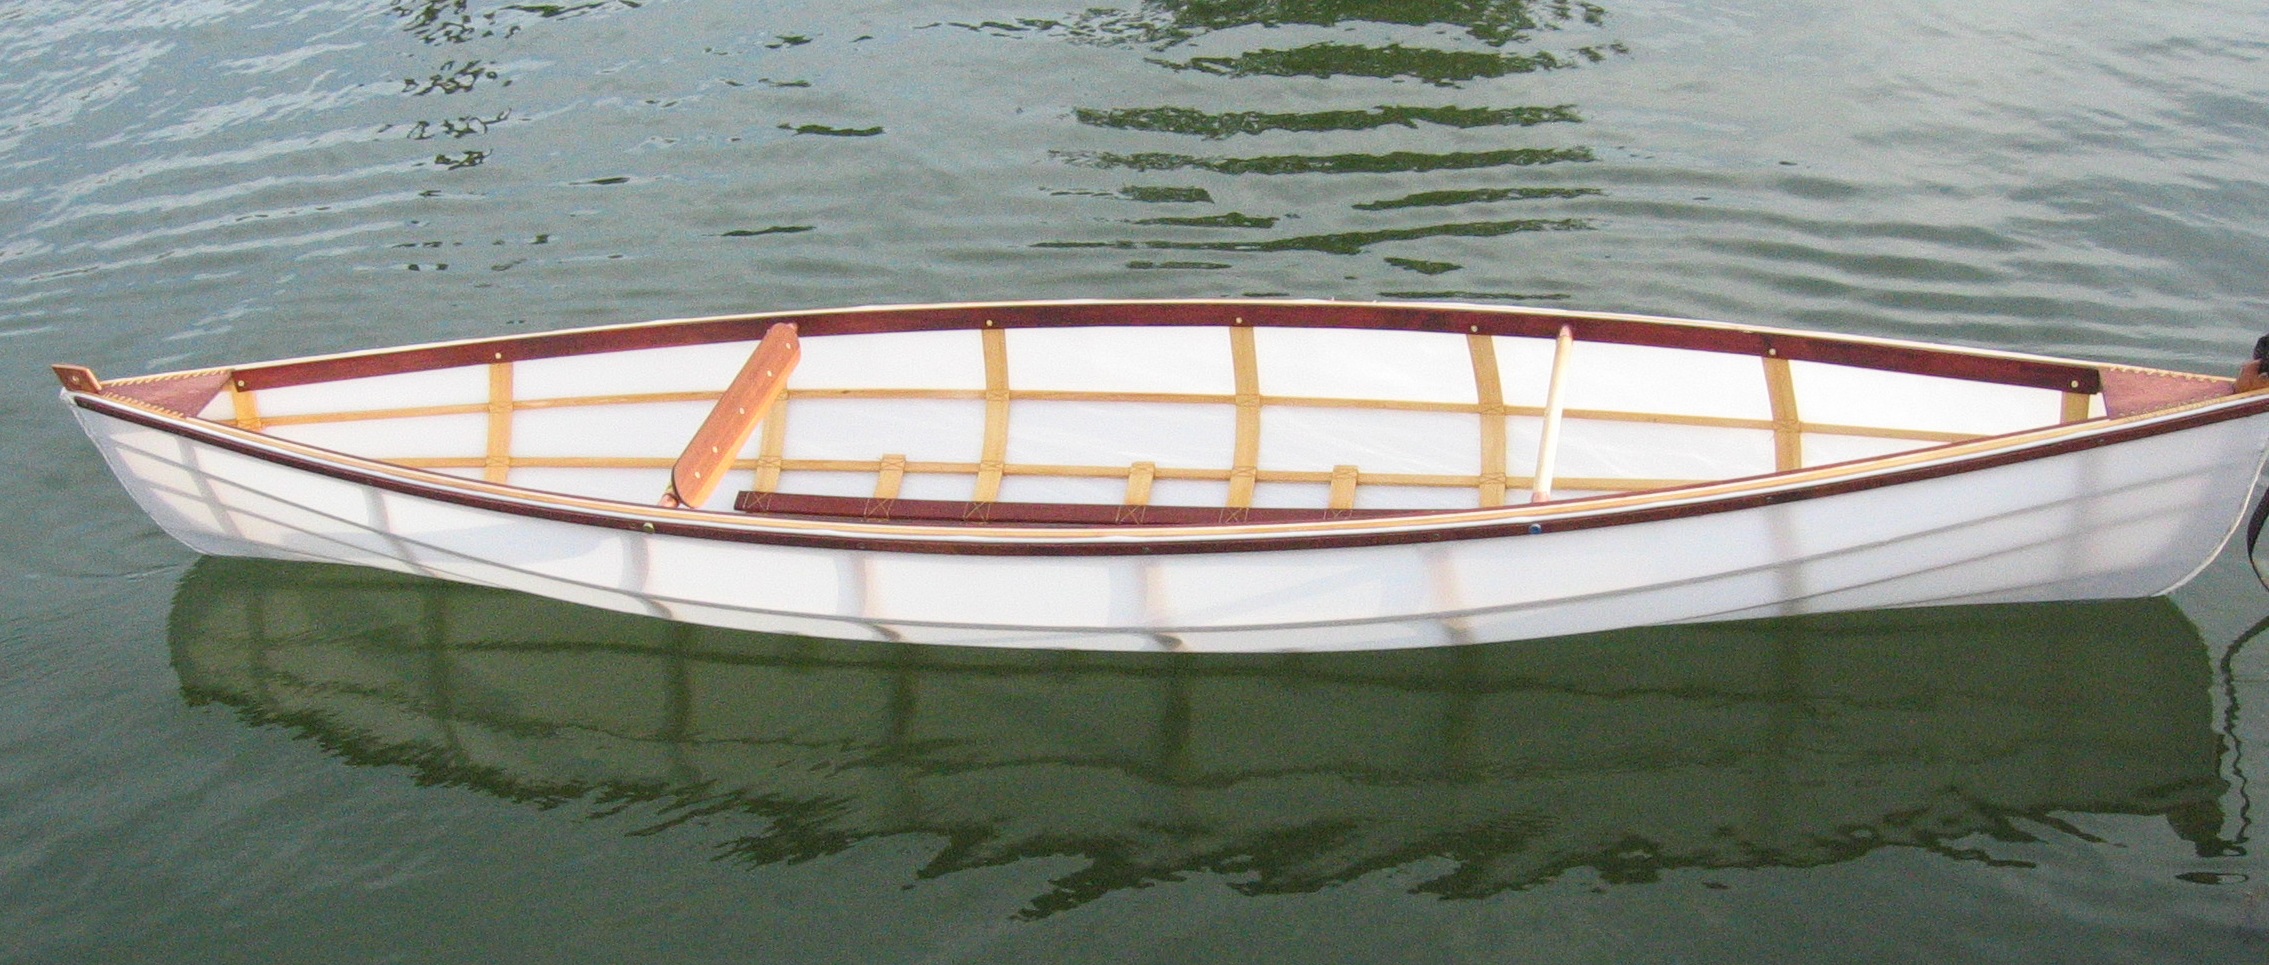 Ultralight one person skin-on-frame canoe – beautiful, super tough 